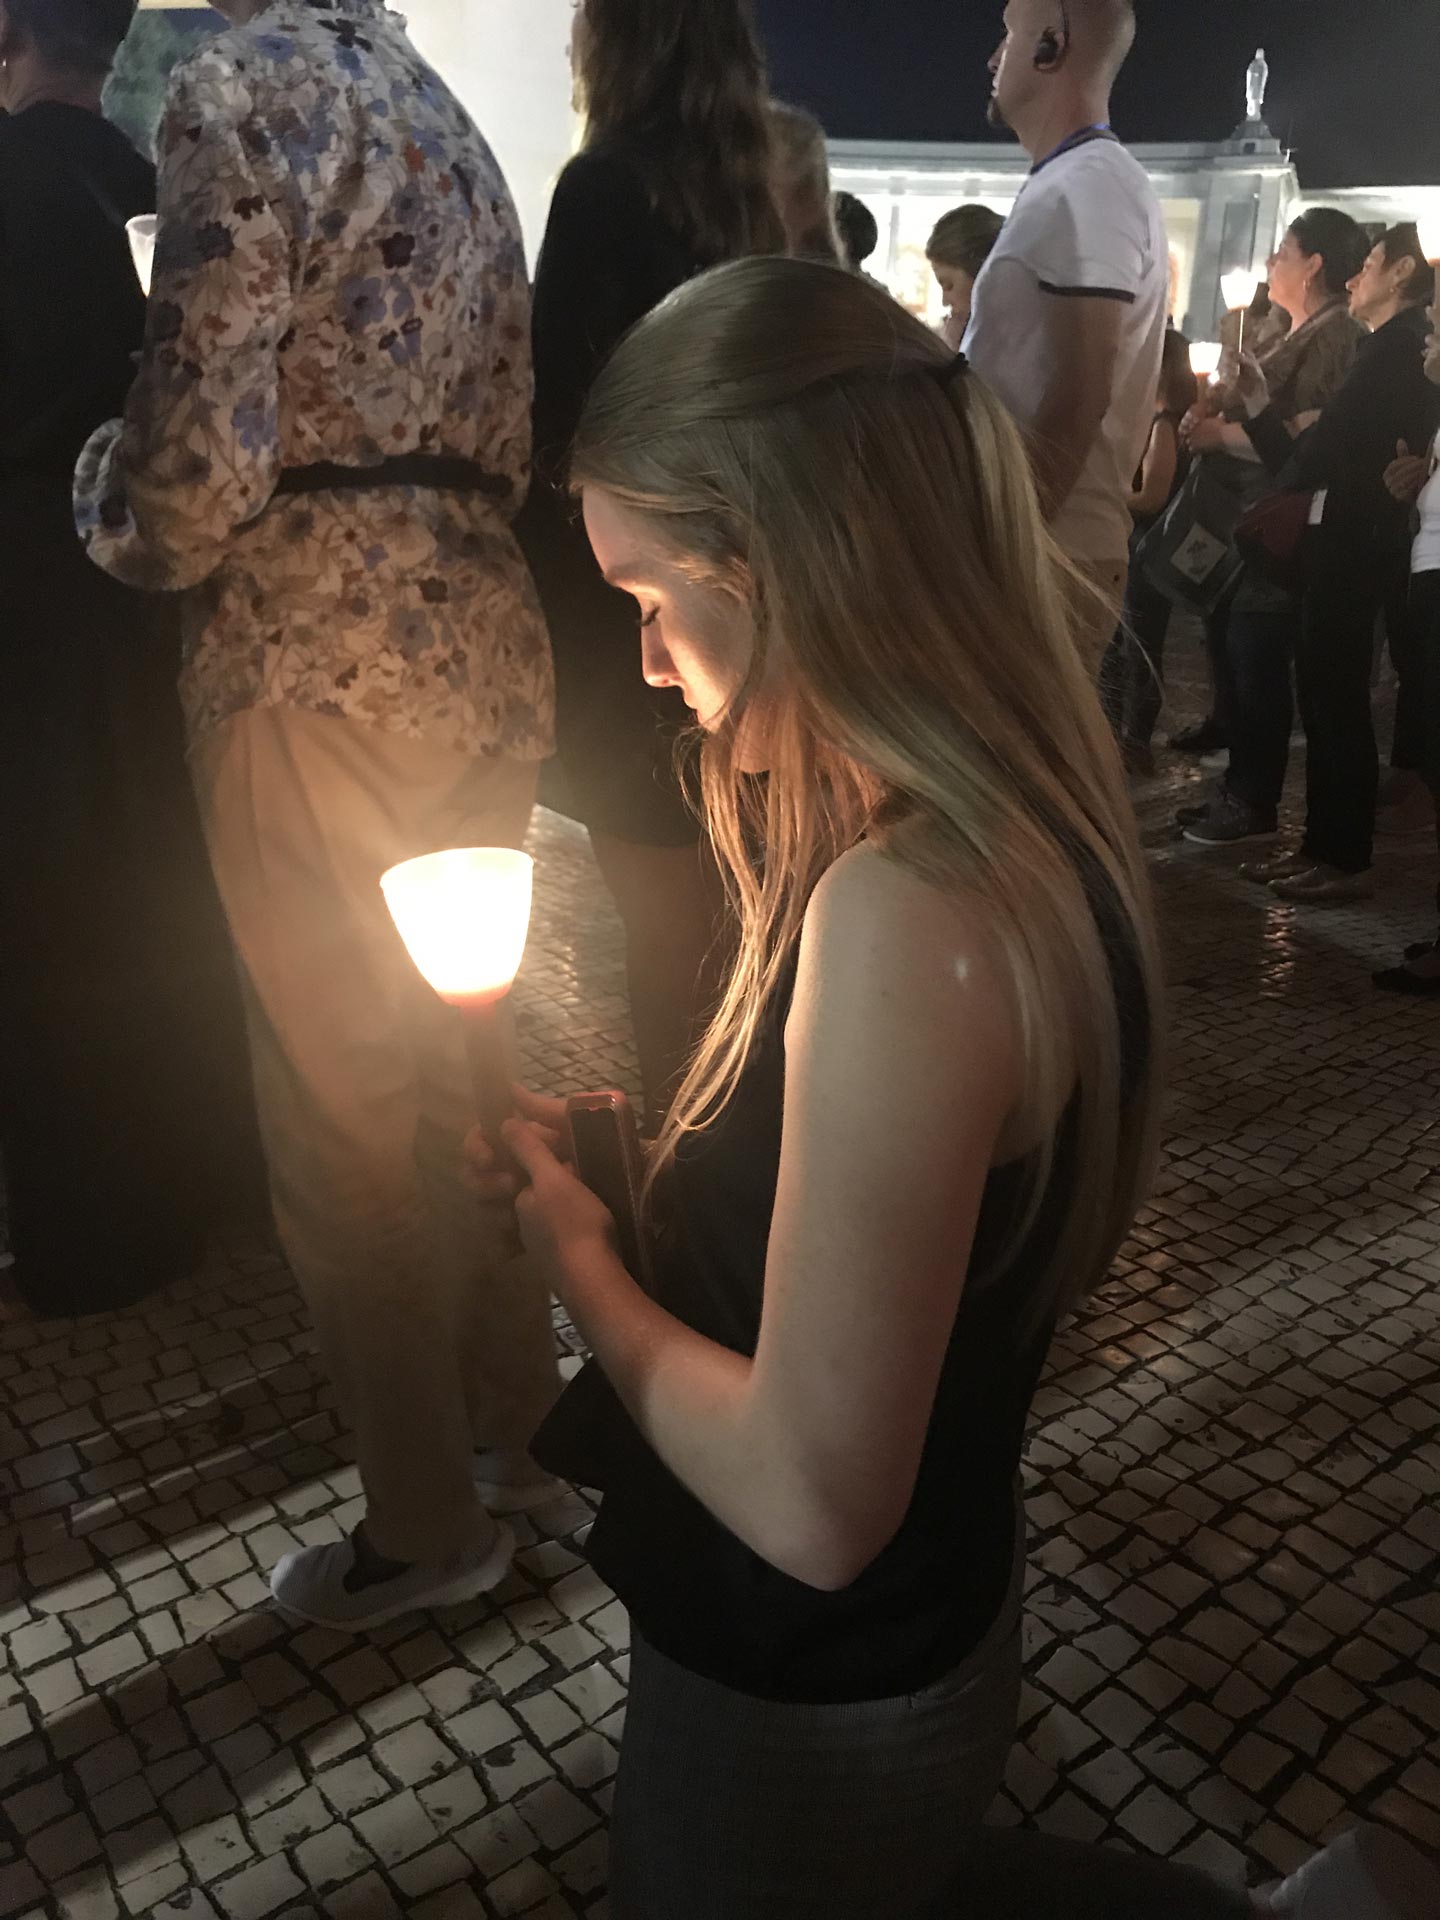 Candlelight pilgrim in Fatima, Portugal